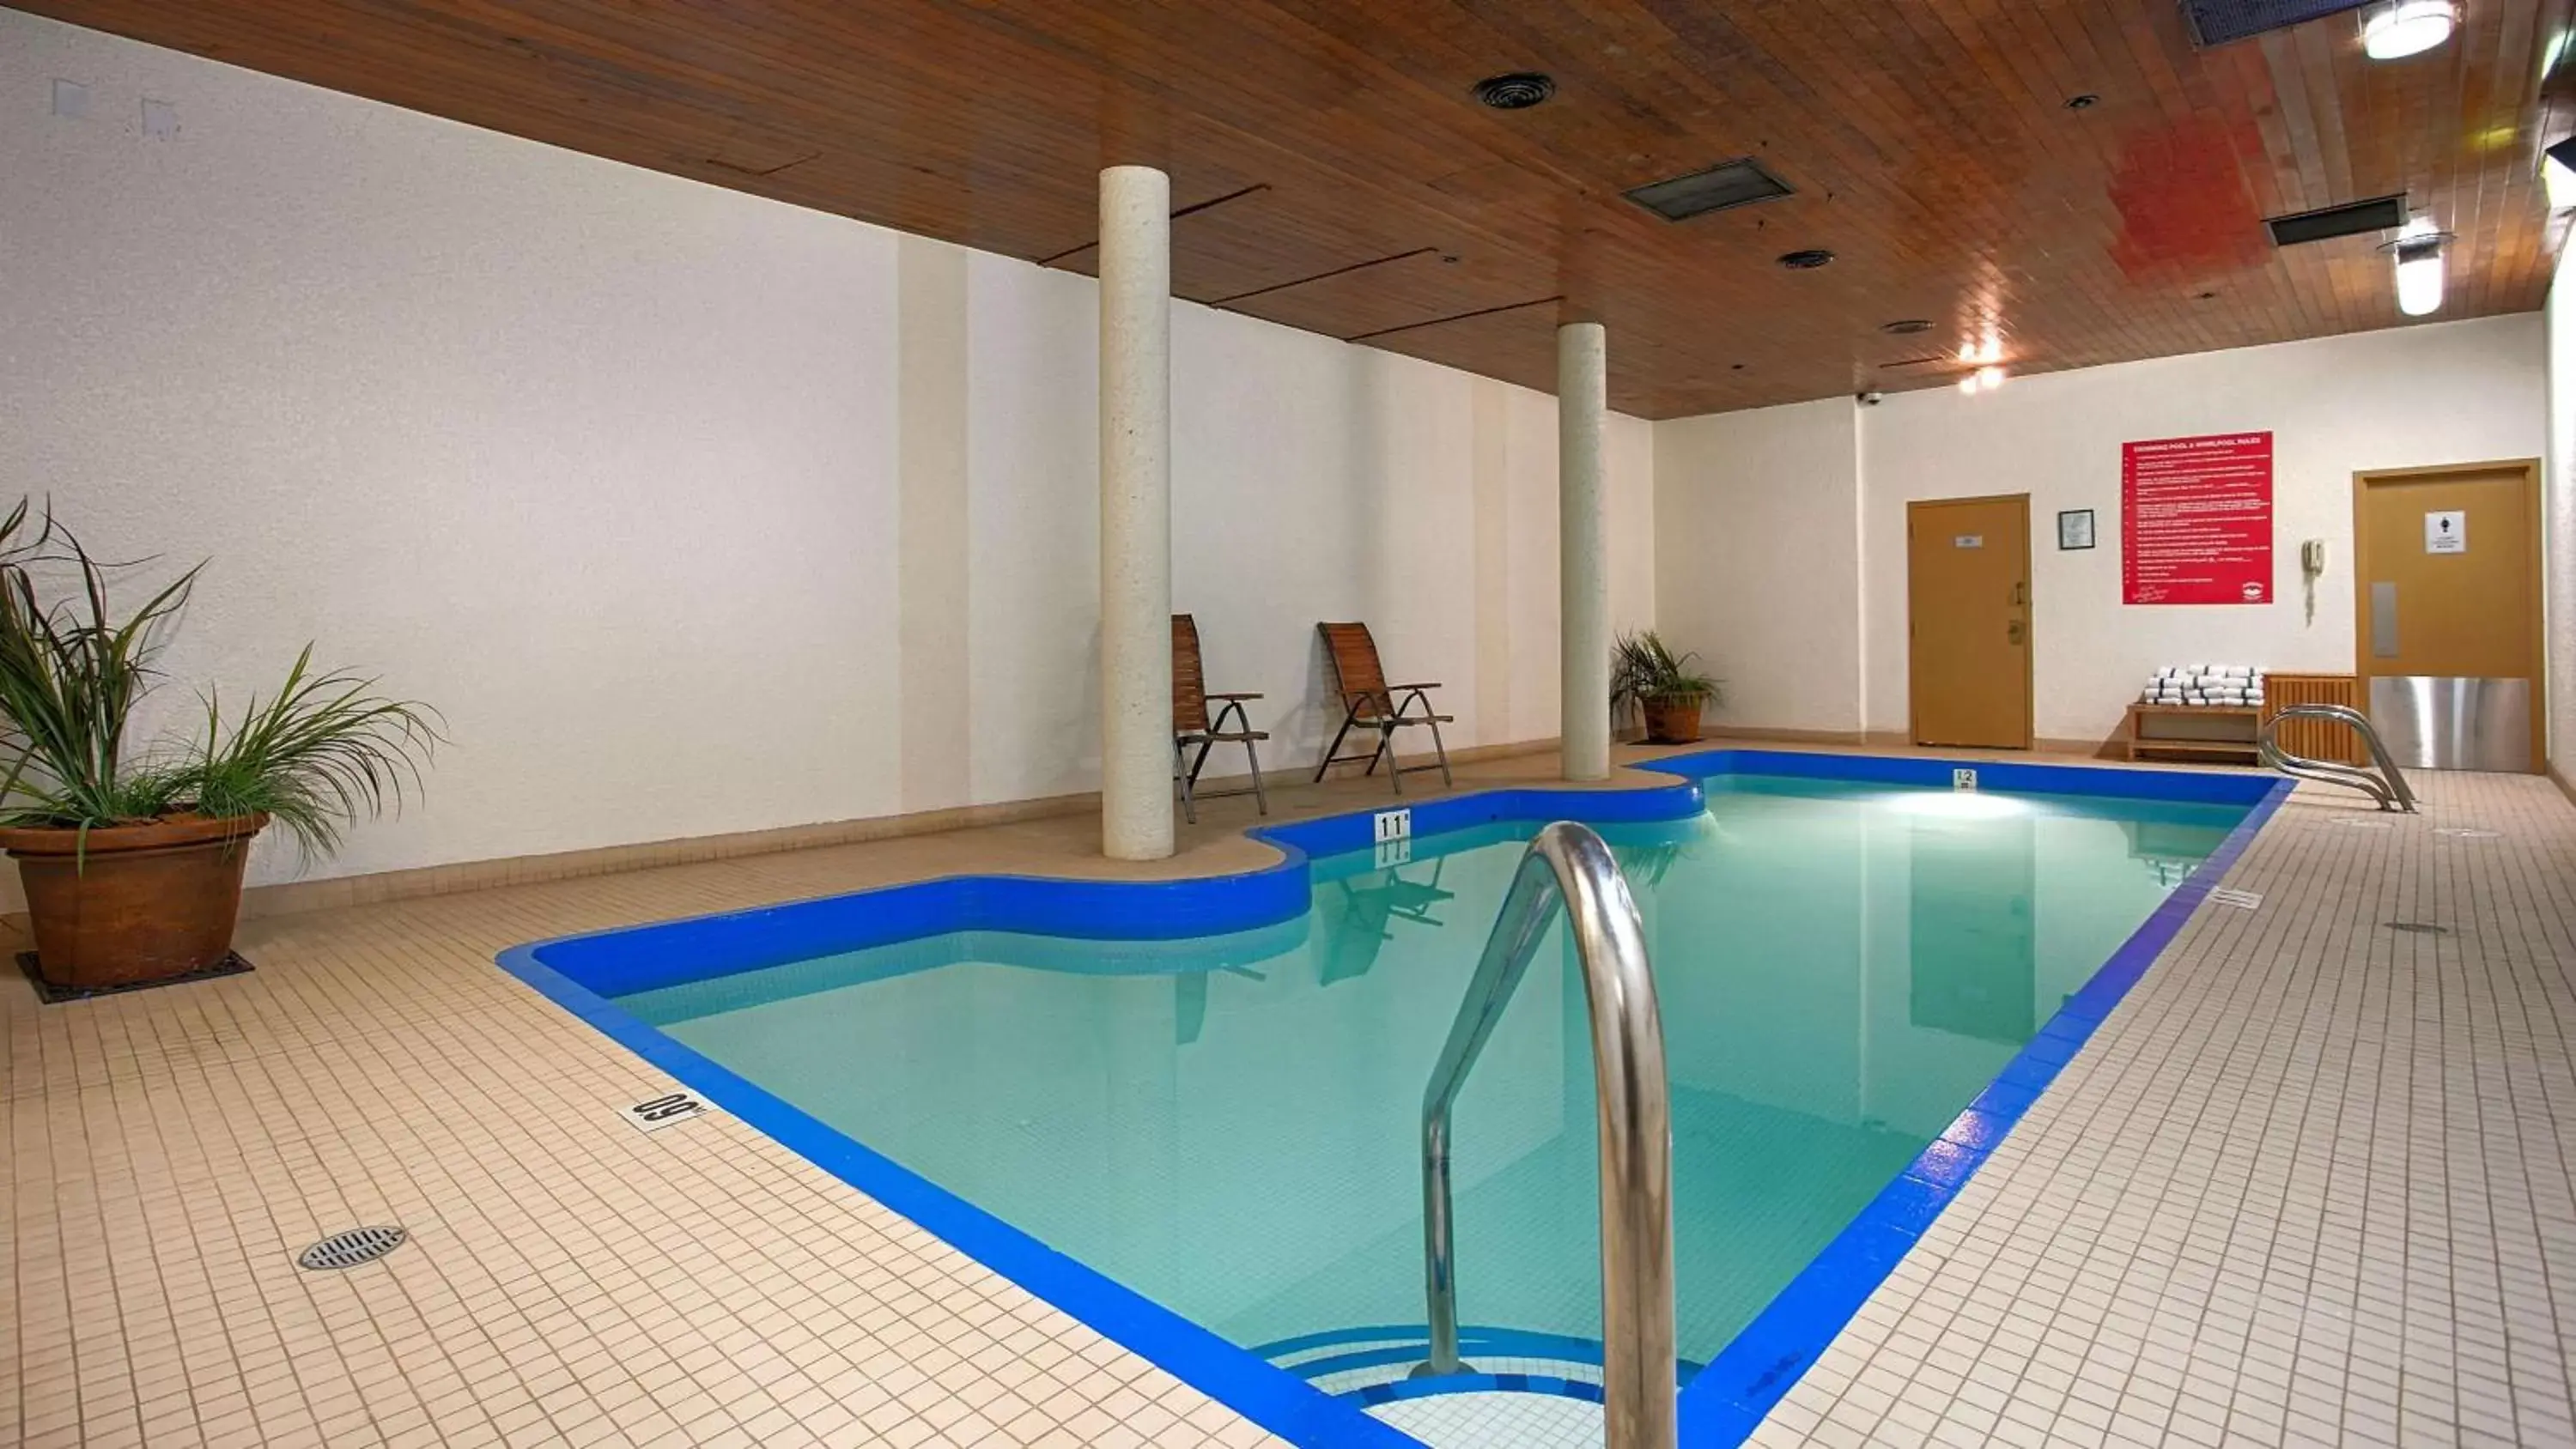 On site, Swimming Pool in Best Western Cedar Park Inn